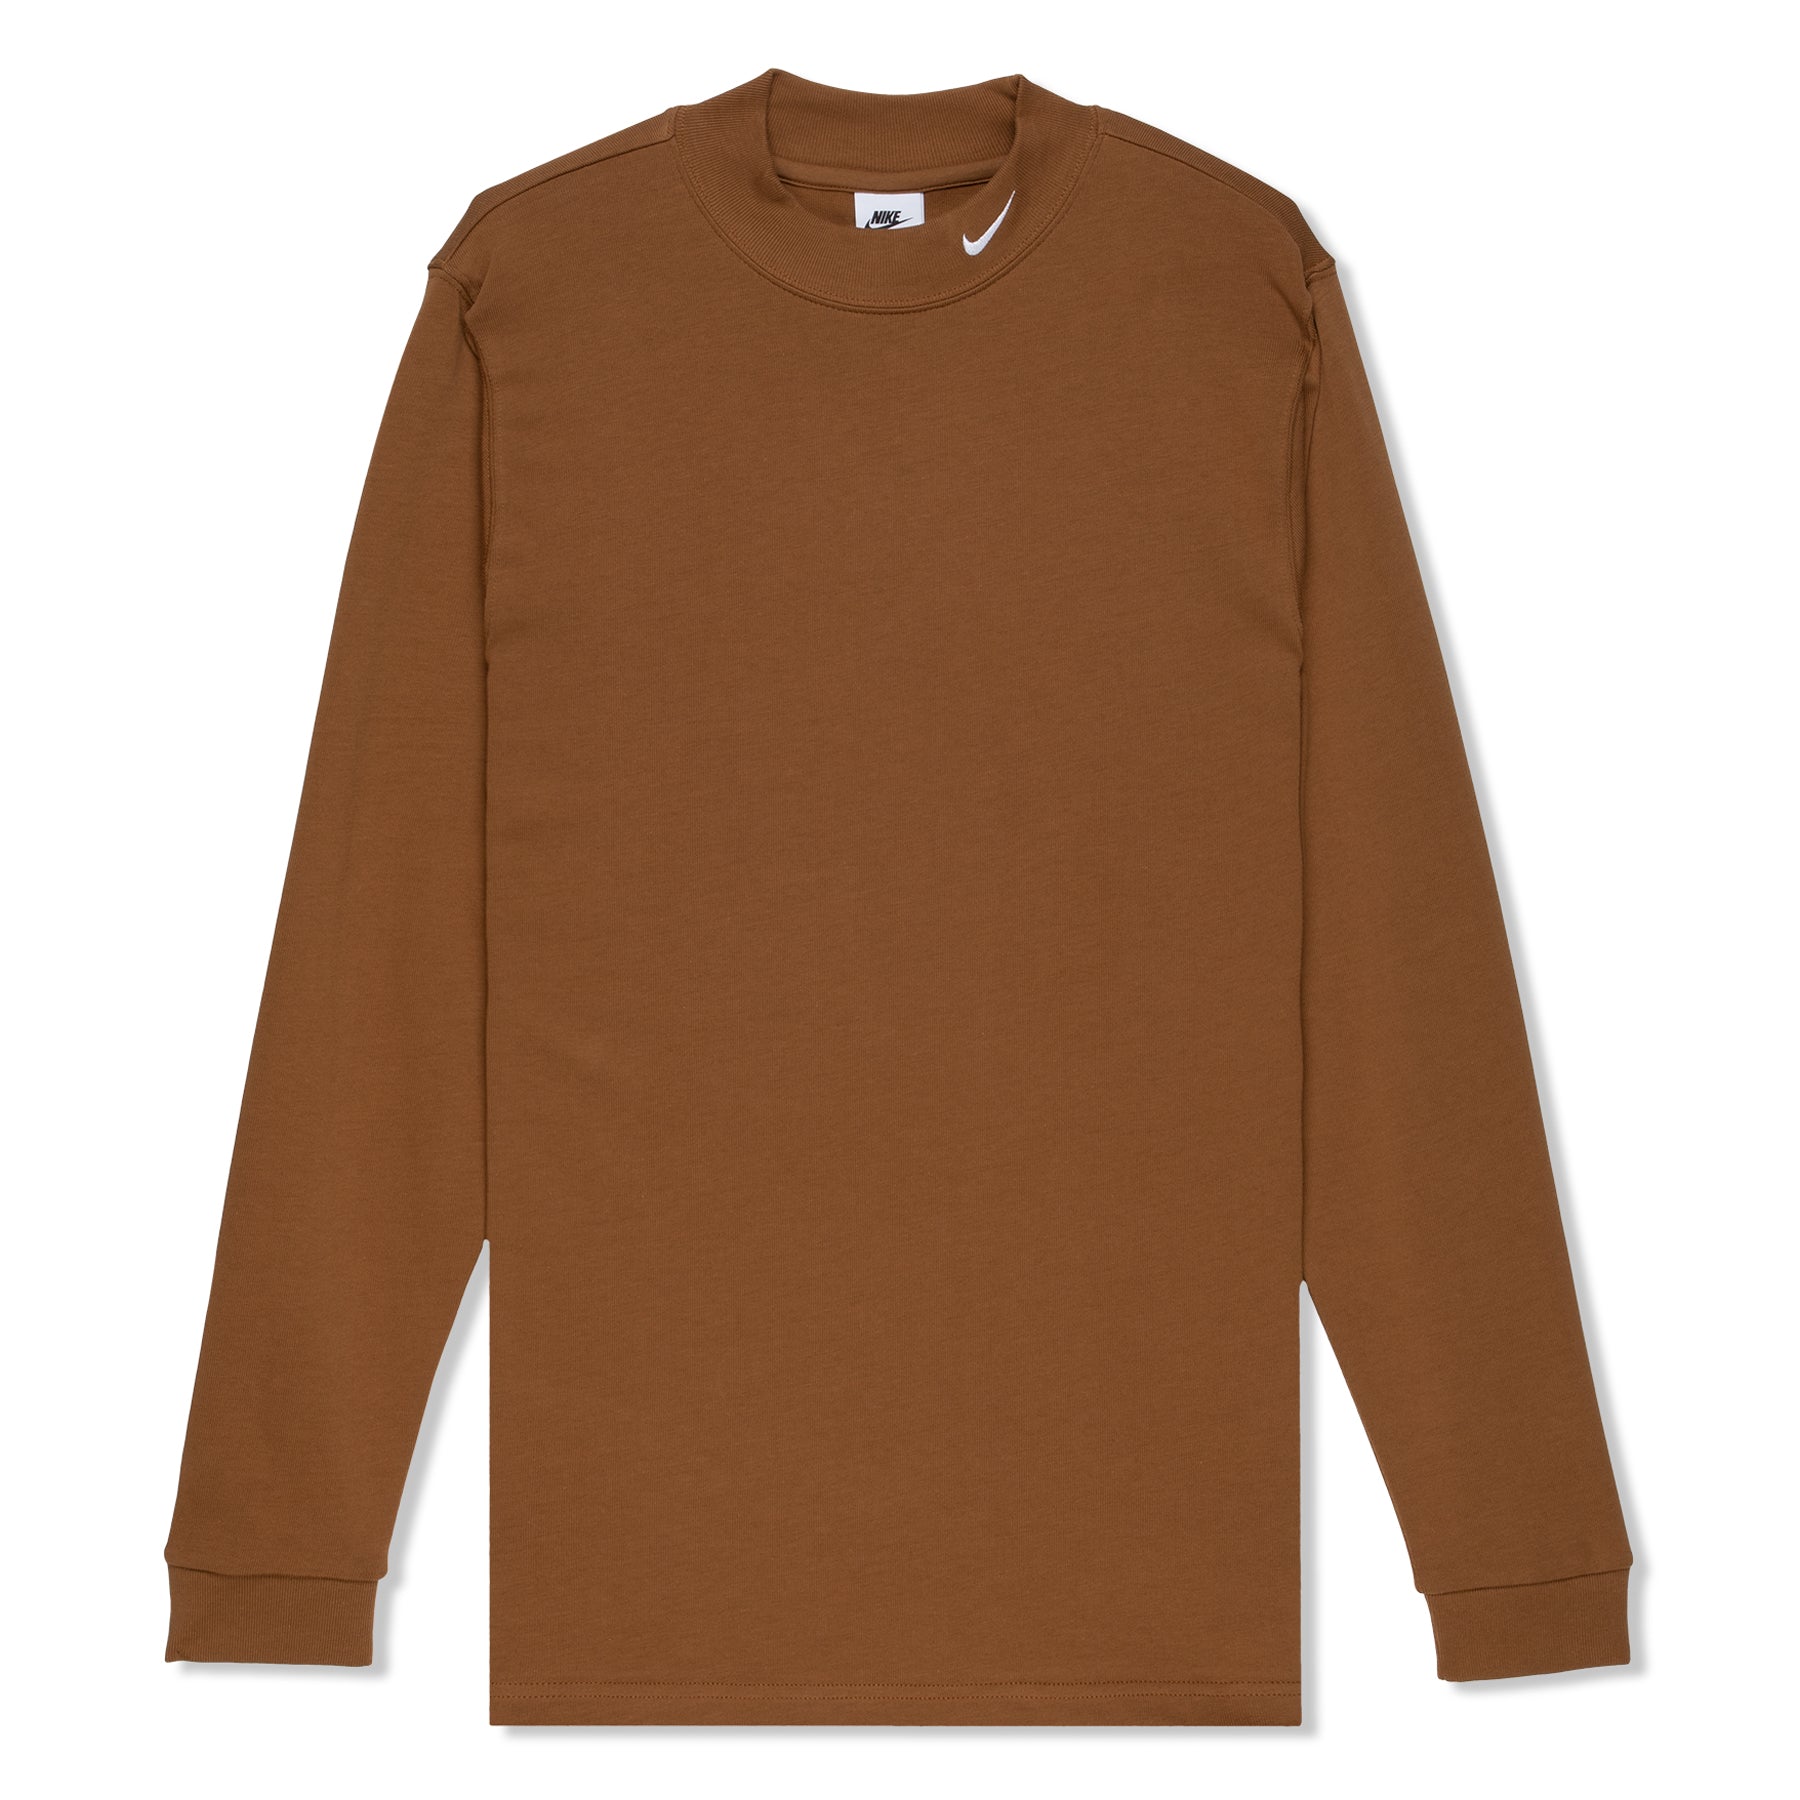 Nike Men's Club Button-Down Short-Sleeve Top-Brown, Size: Medium, Cotton